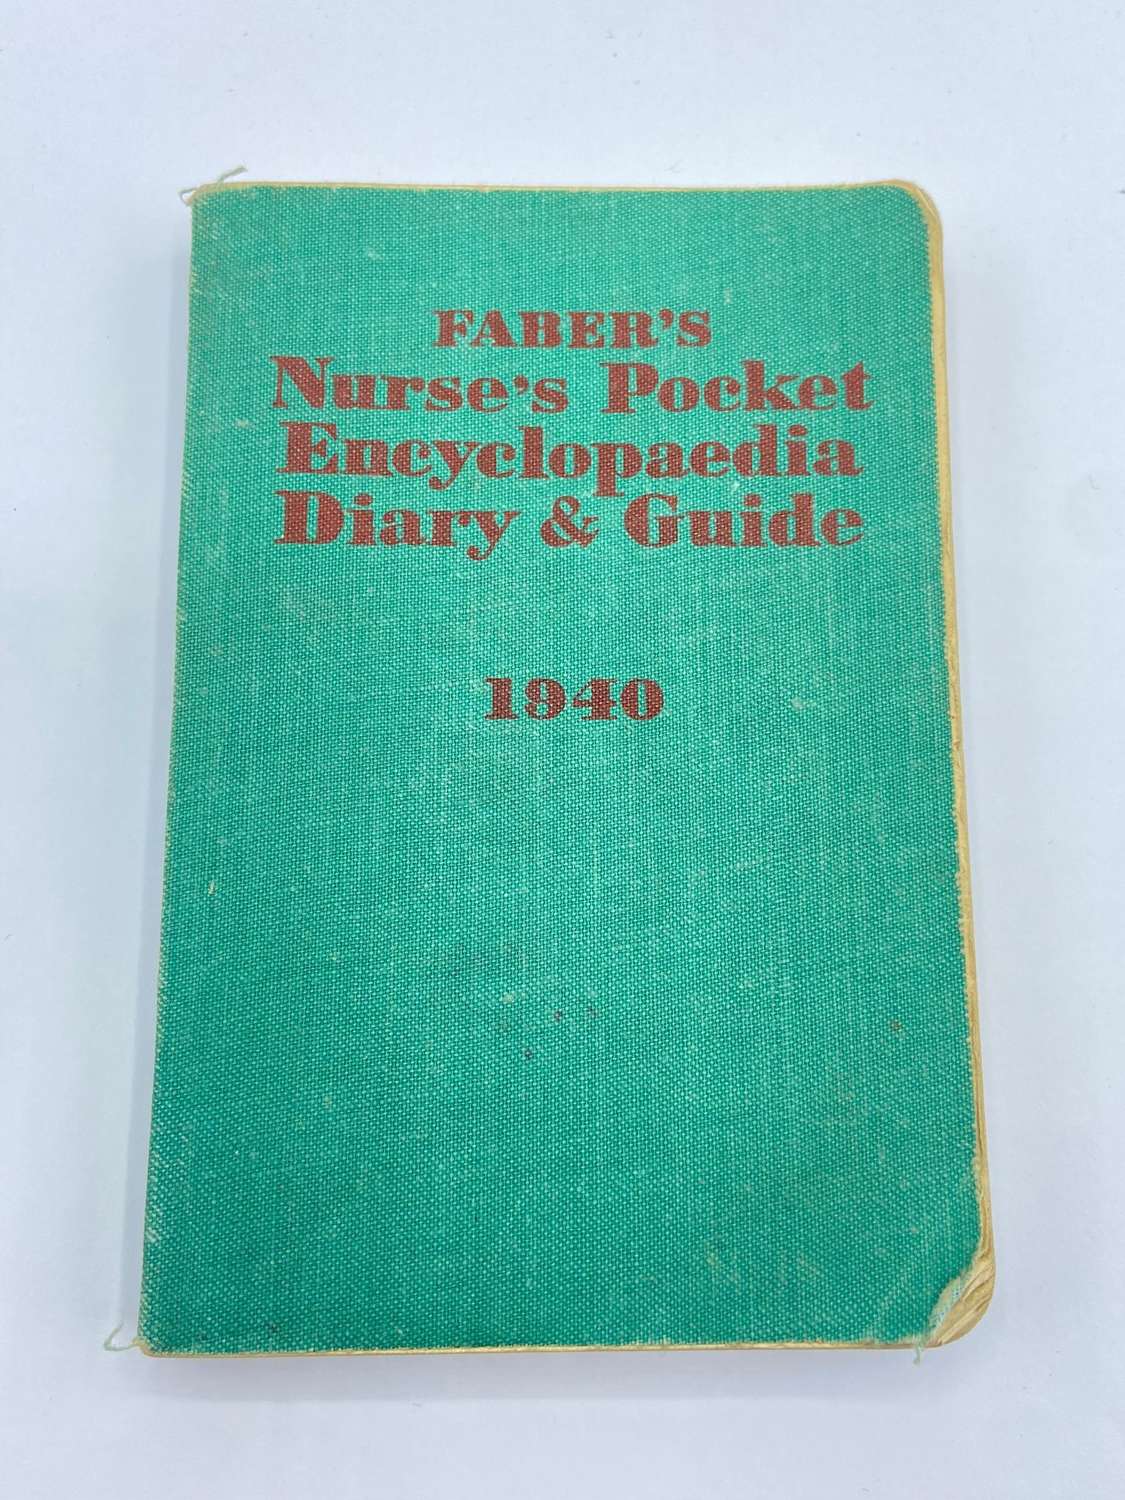 WW2 British Fabre’s Nurses Pocket Encyclopaedia Diary & Guide 1940